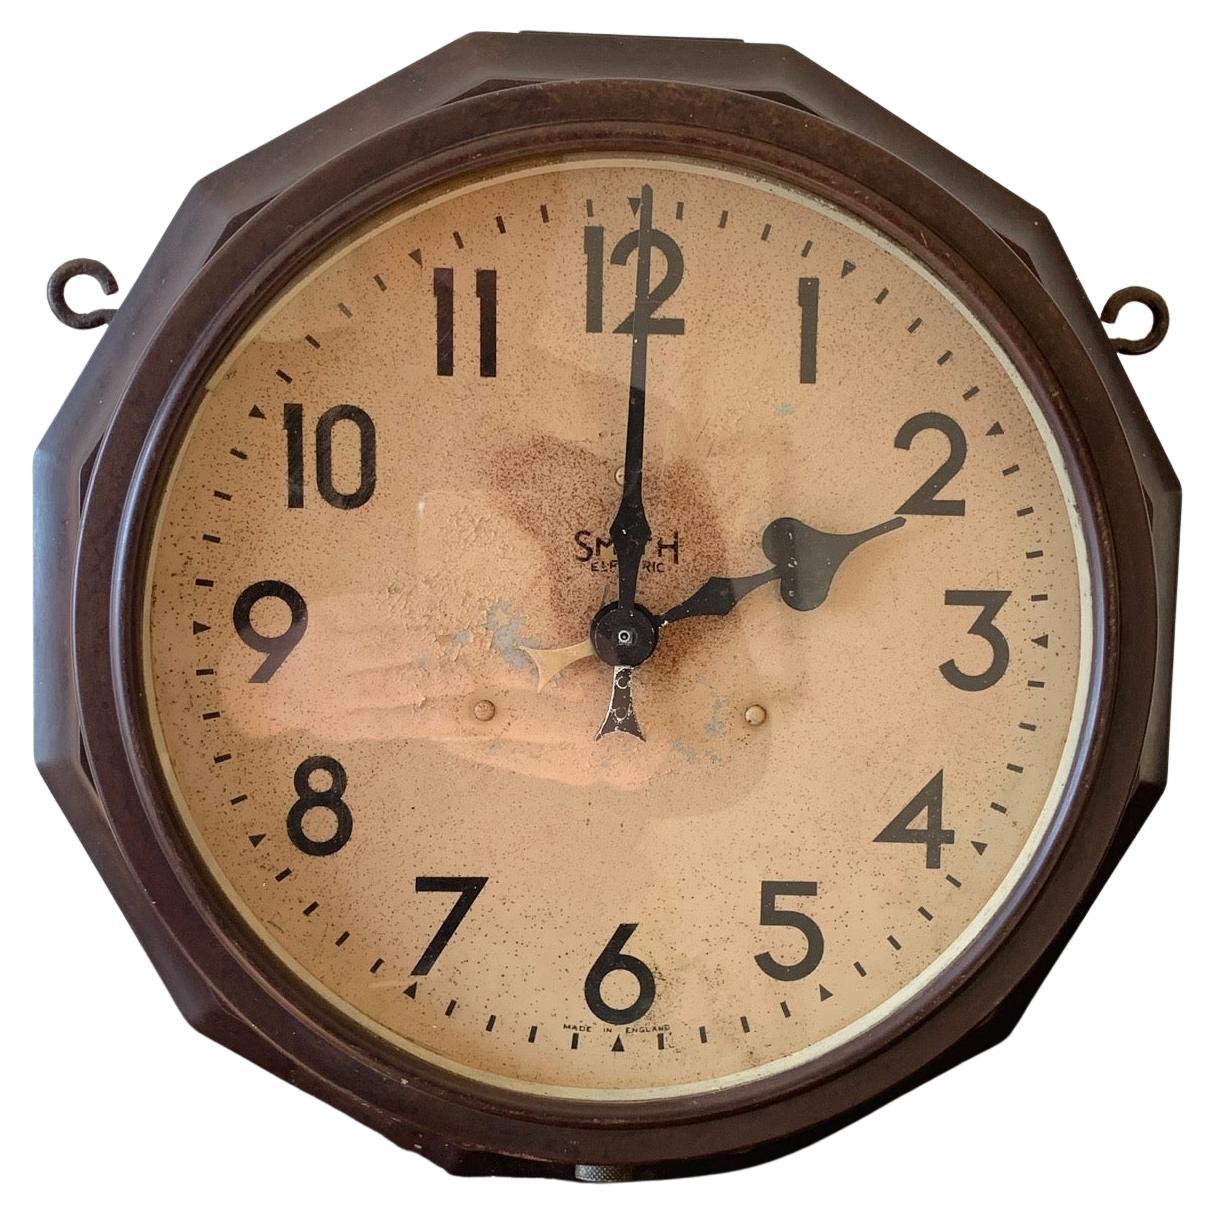 Horloge de station Smith double face en vente